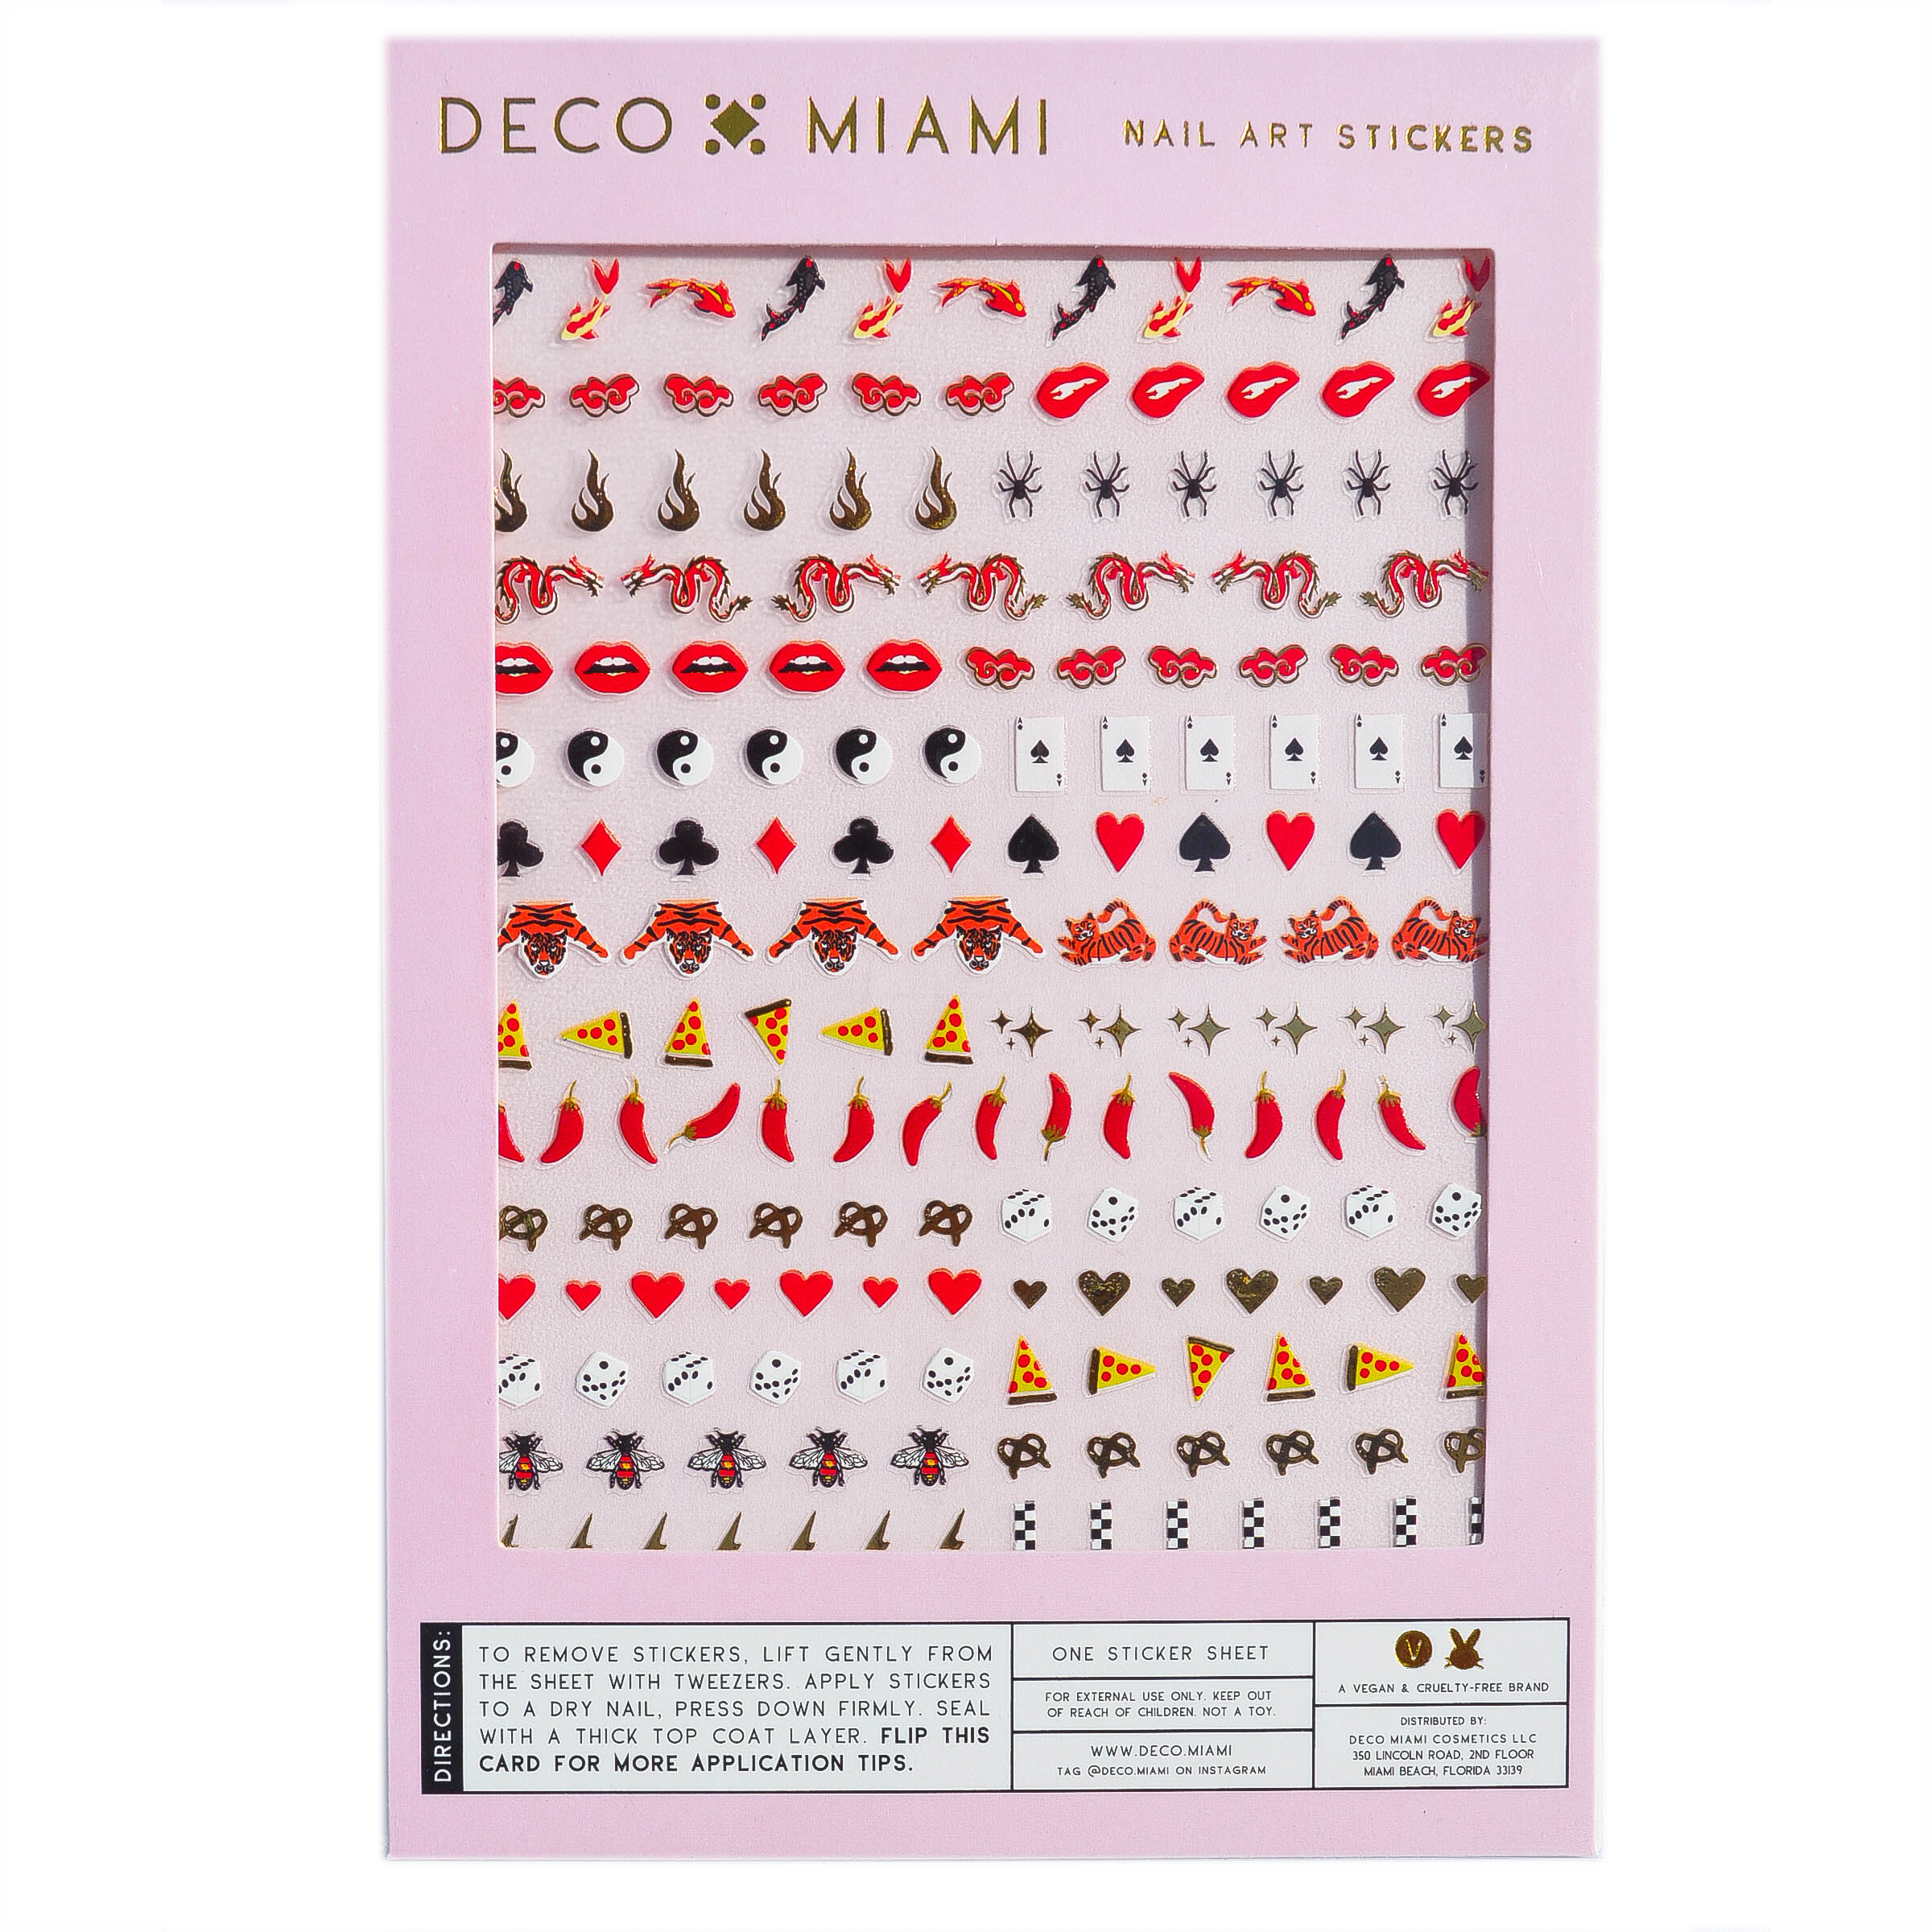 SPOOKY - NAIL ART STICKERS – Deco Miami